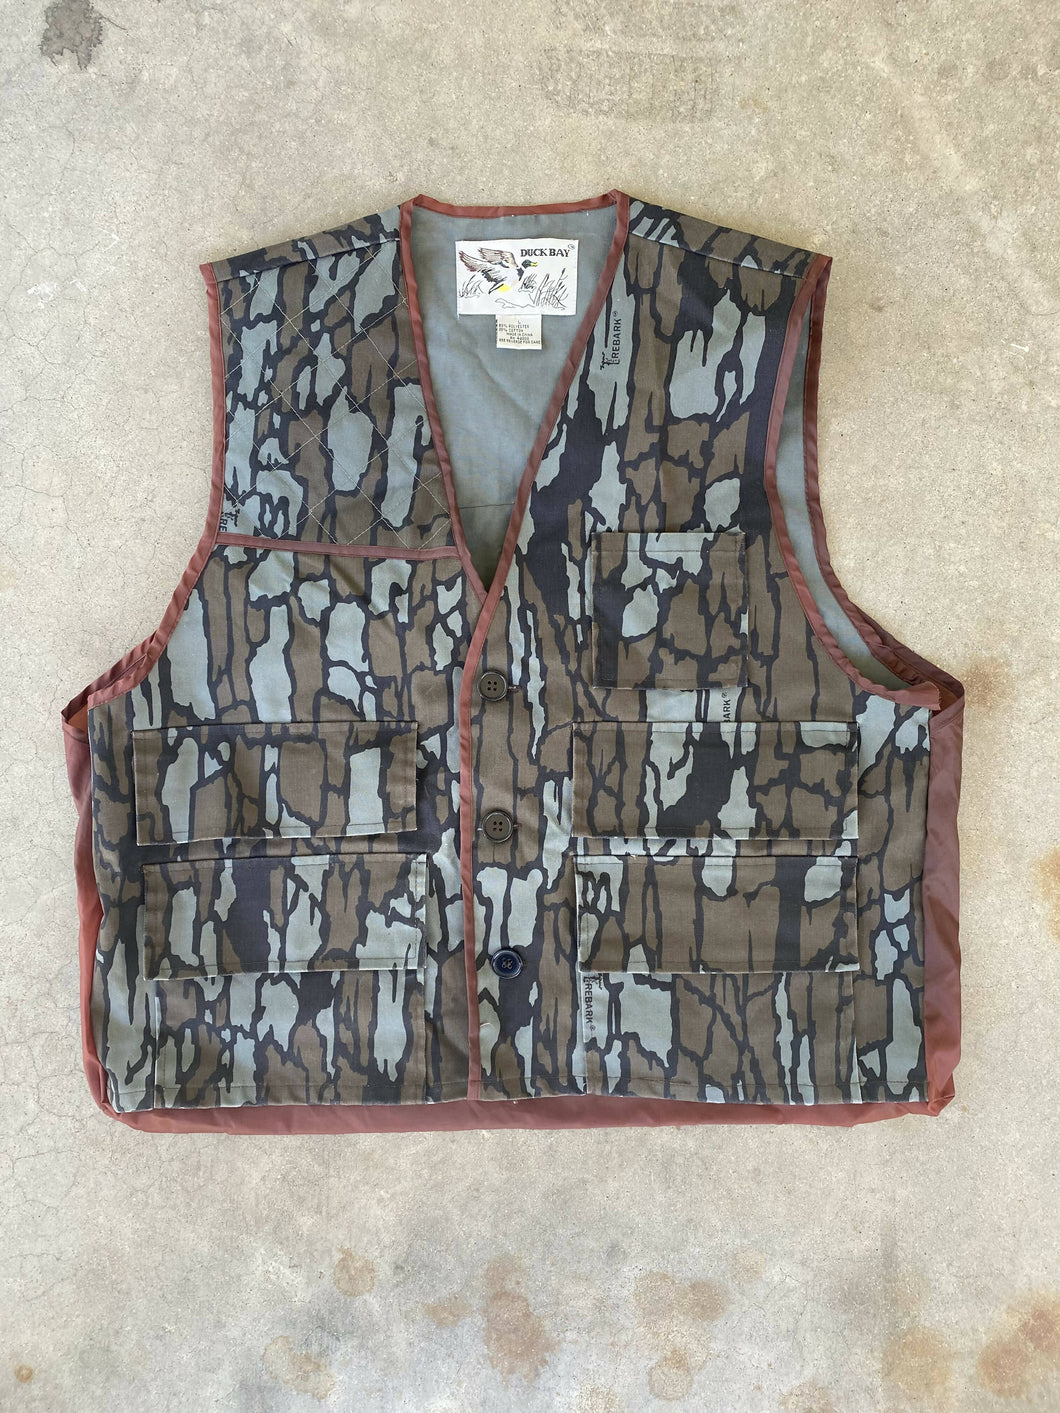 Vintage Duckbay Trebark Vest (L)🇺🇸